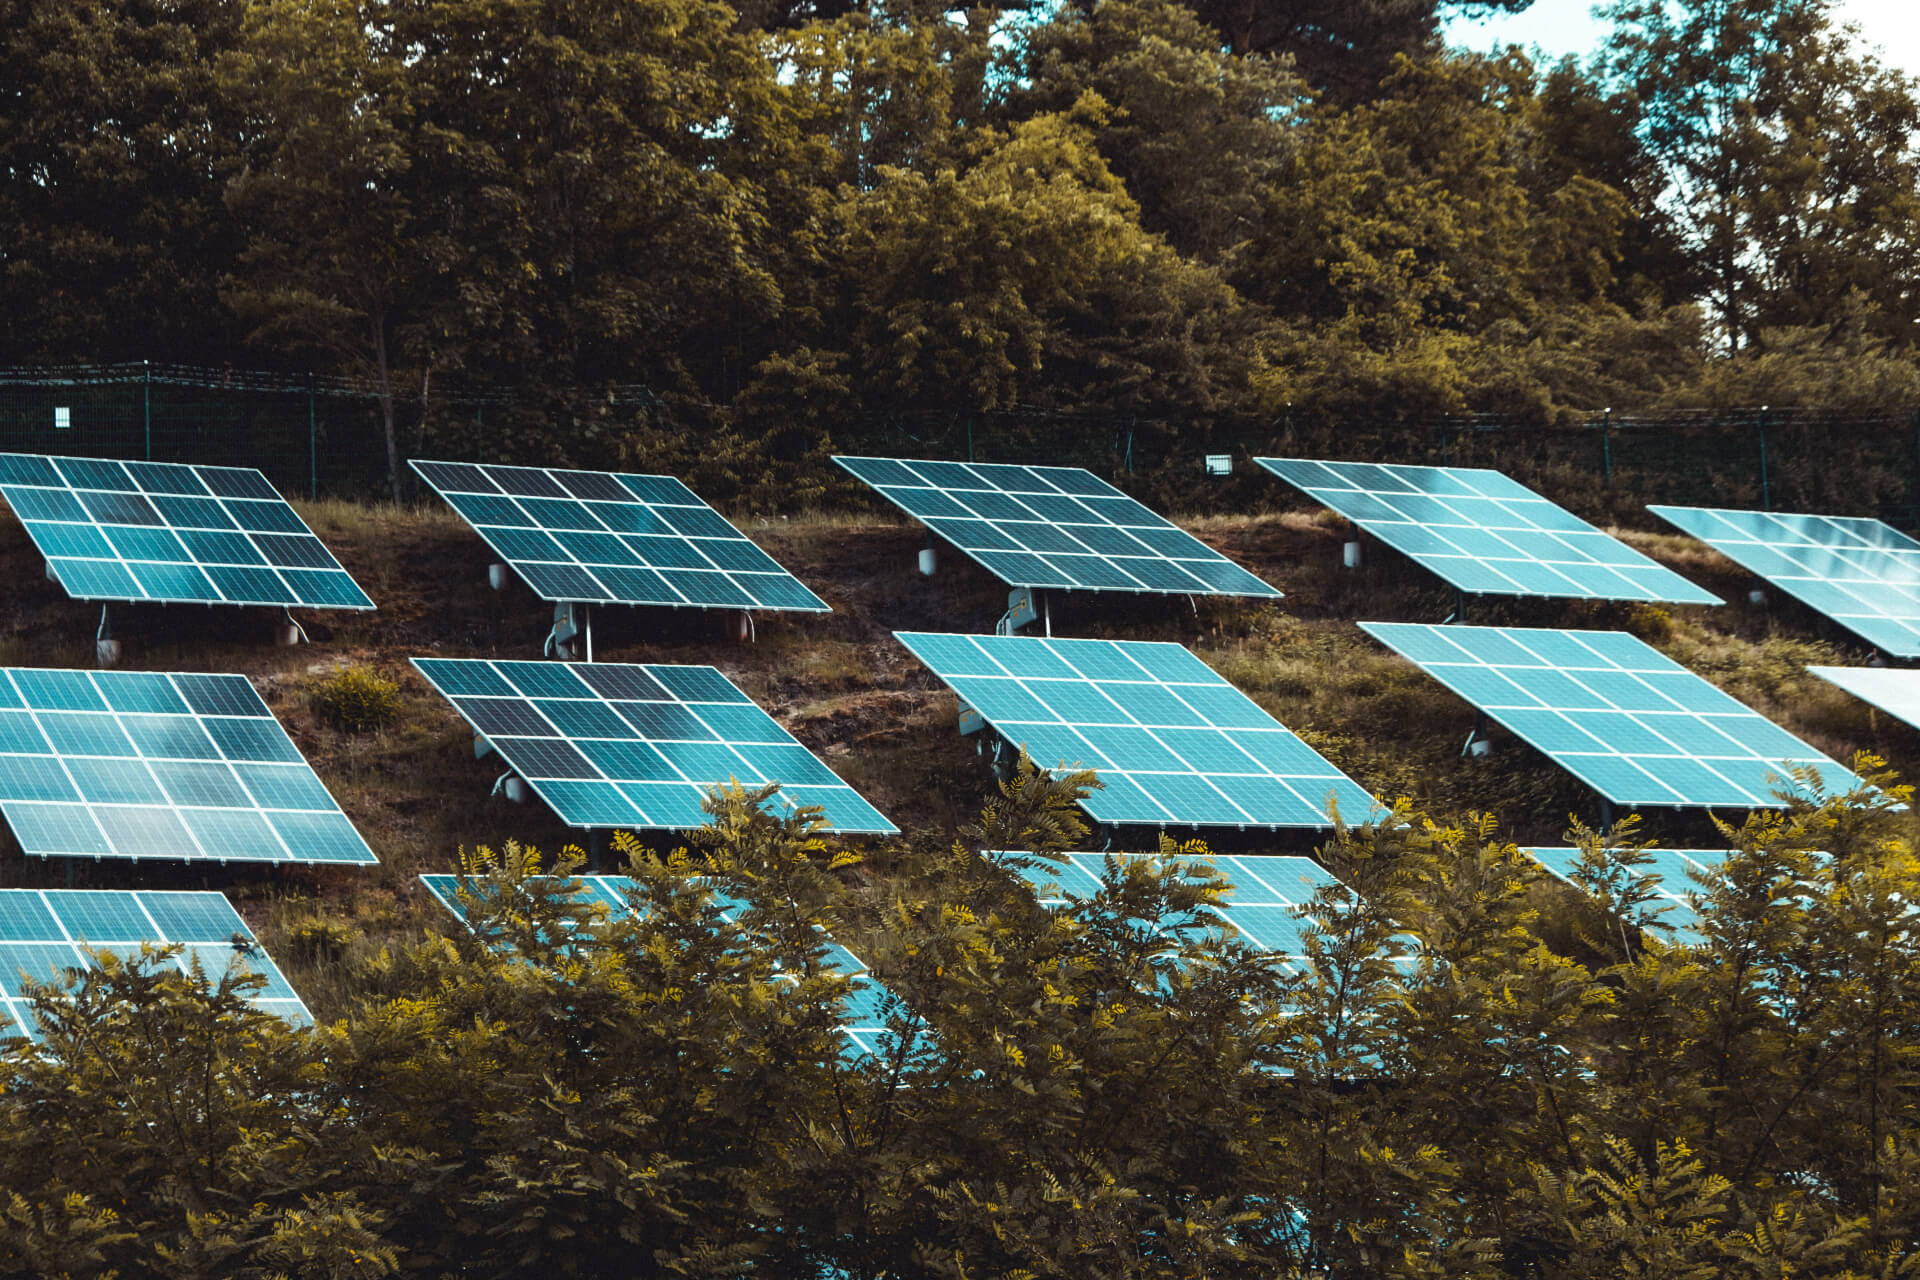 solar panels among trees